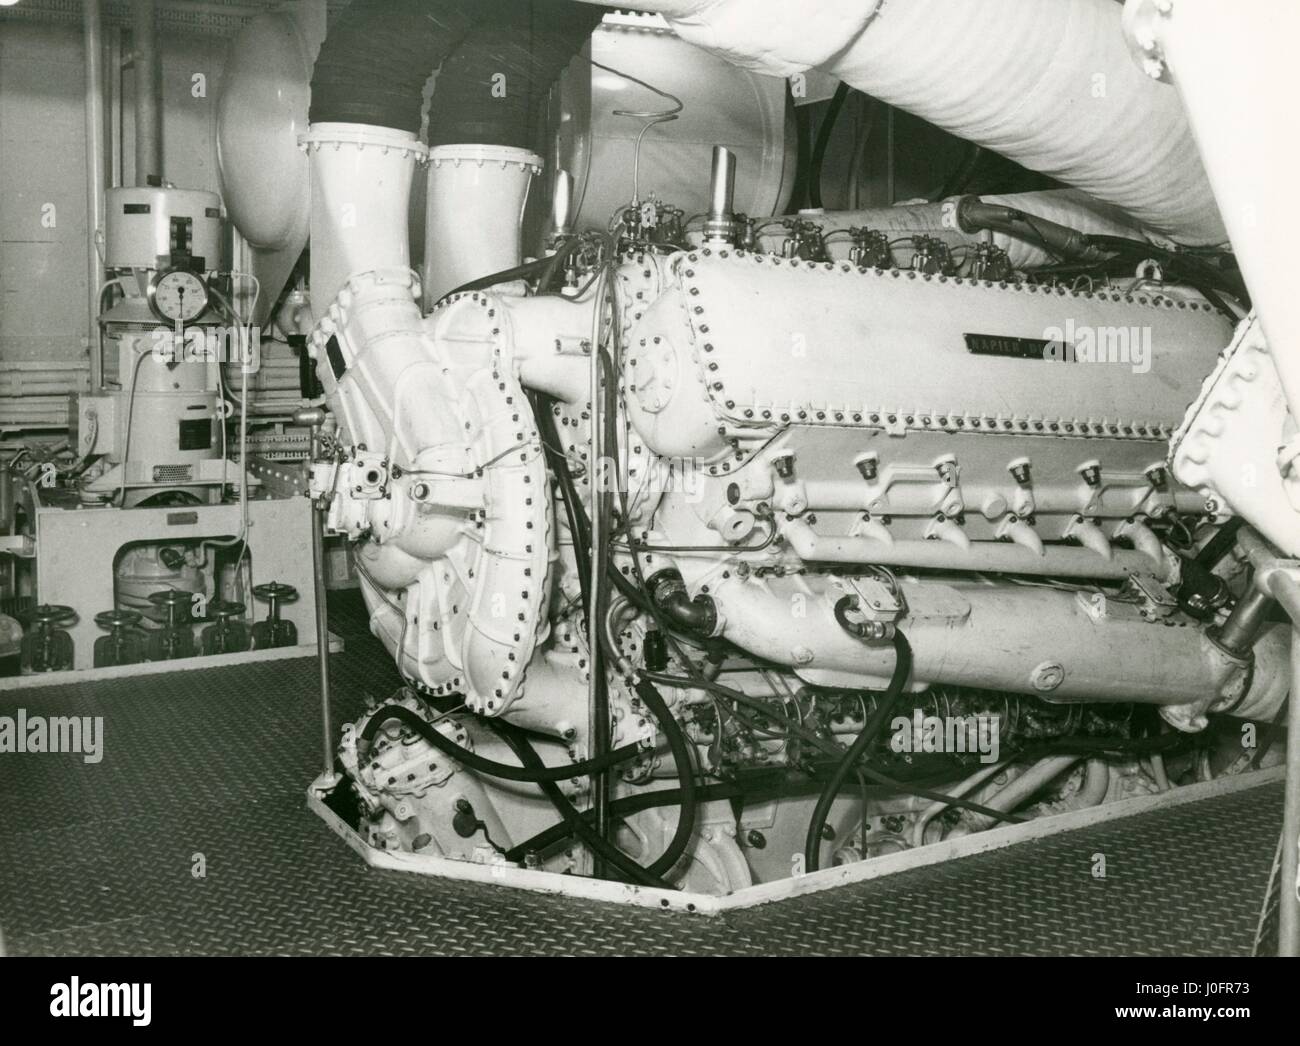 Napier Deltic engine Stock Photo